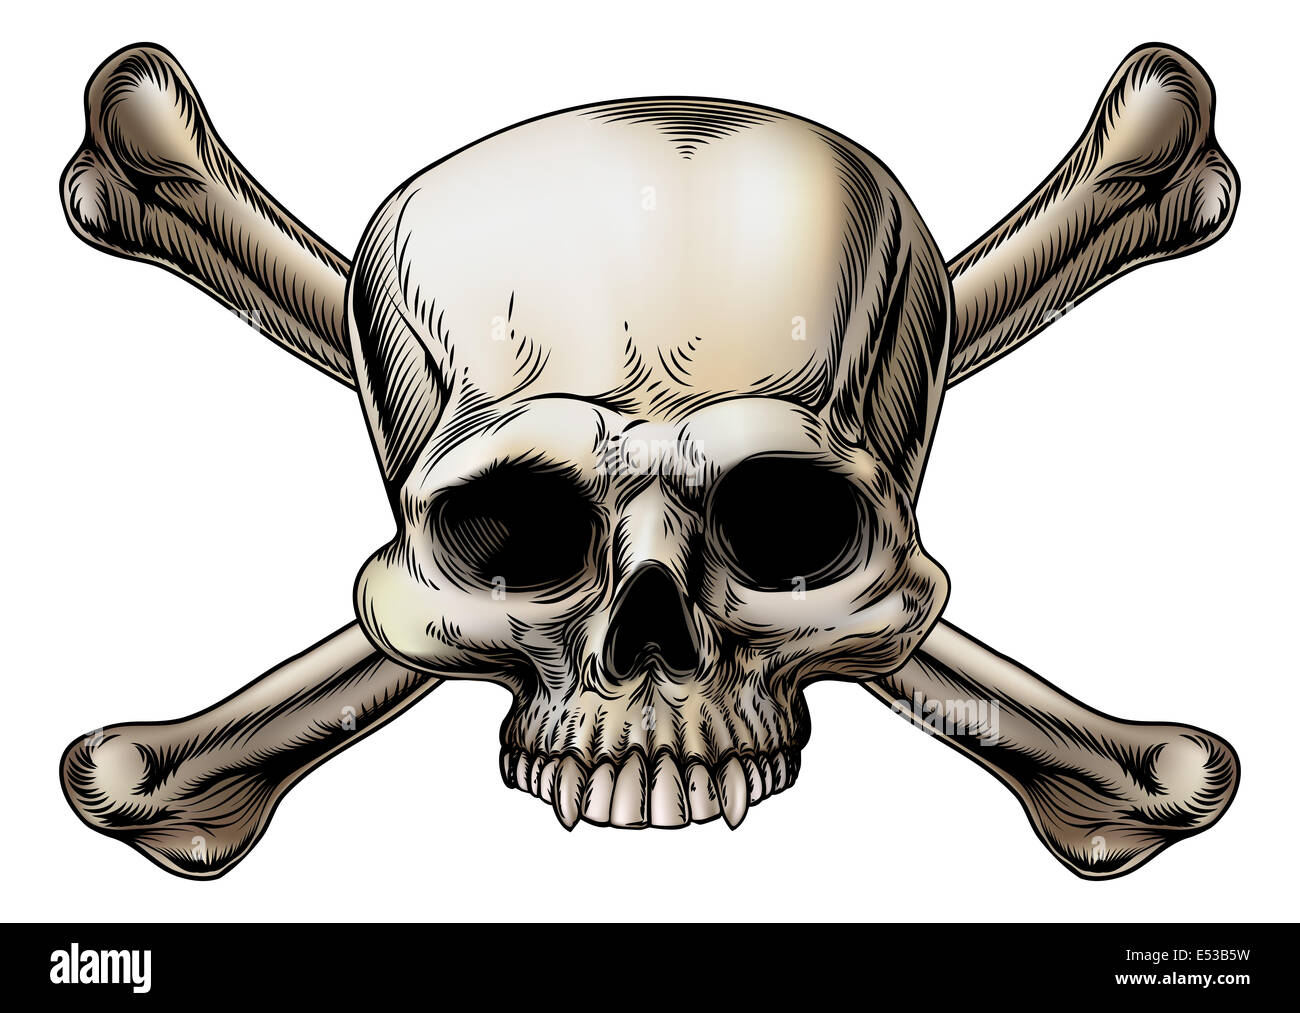 cool skull and crossbones